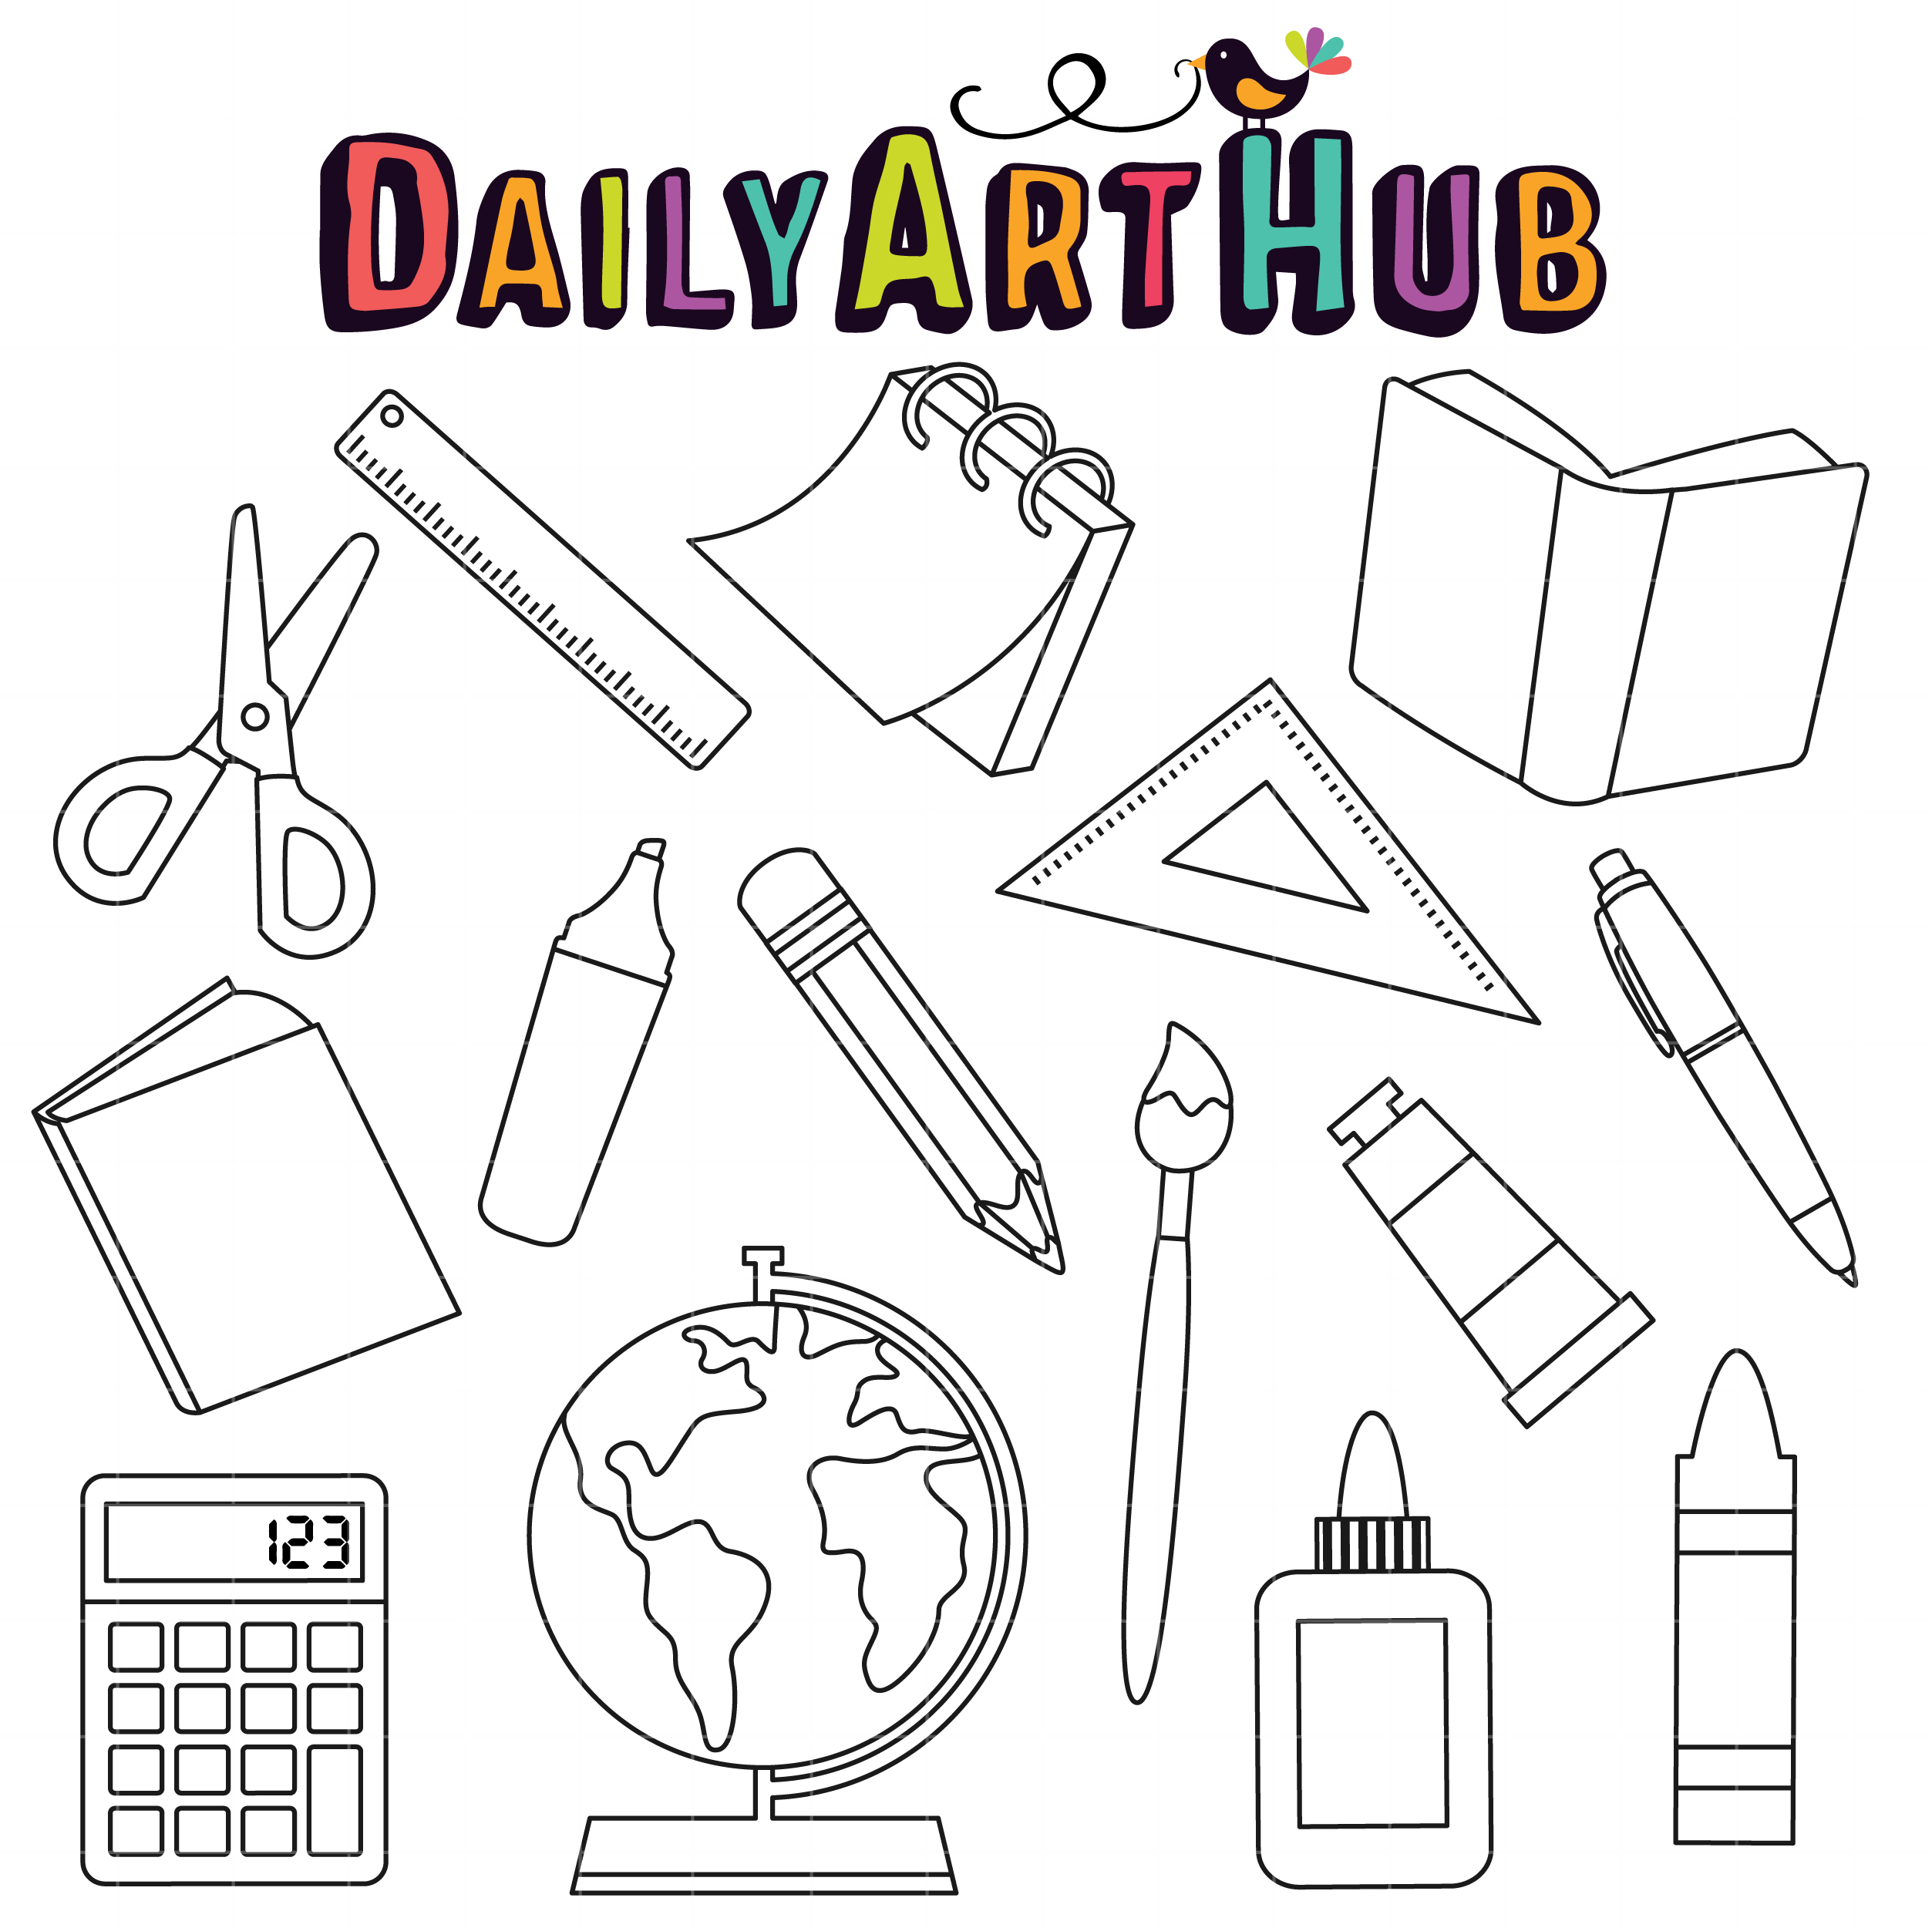 school-supplies-outline-clip-art-set-daily-art-hub-free-clip-art